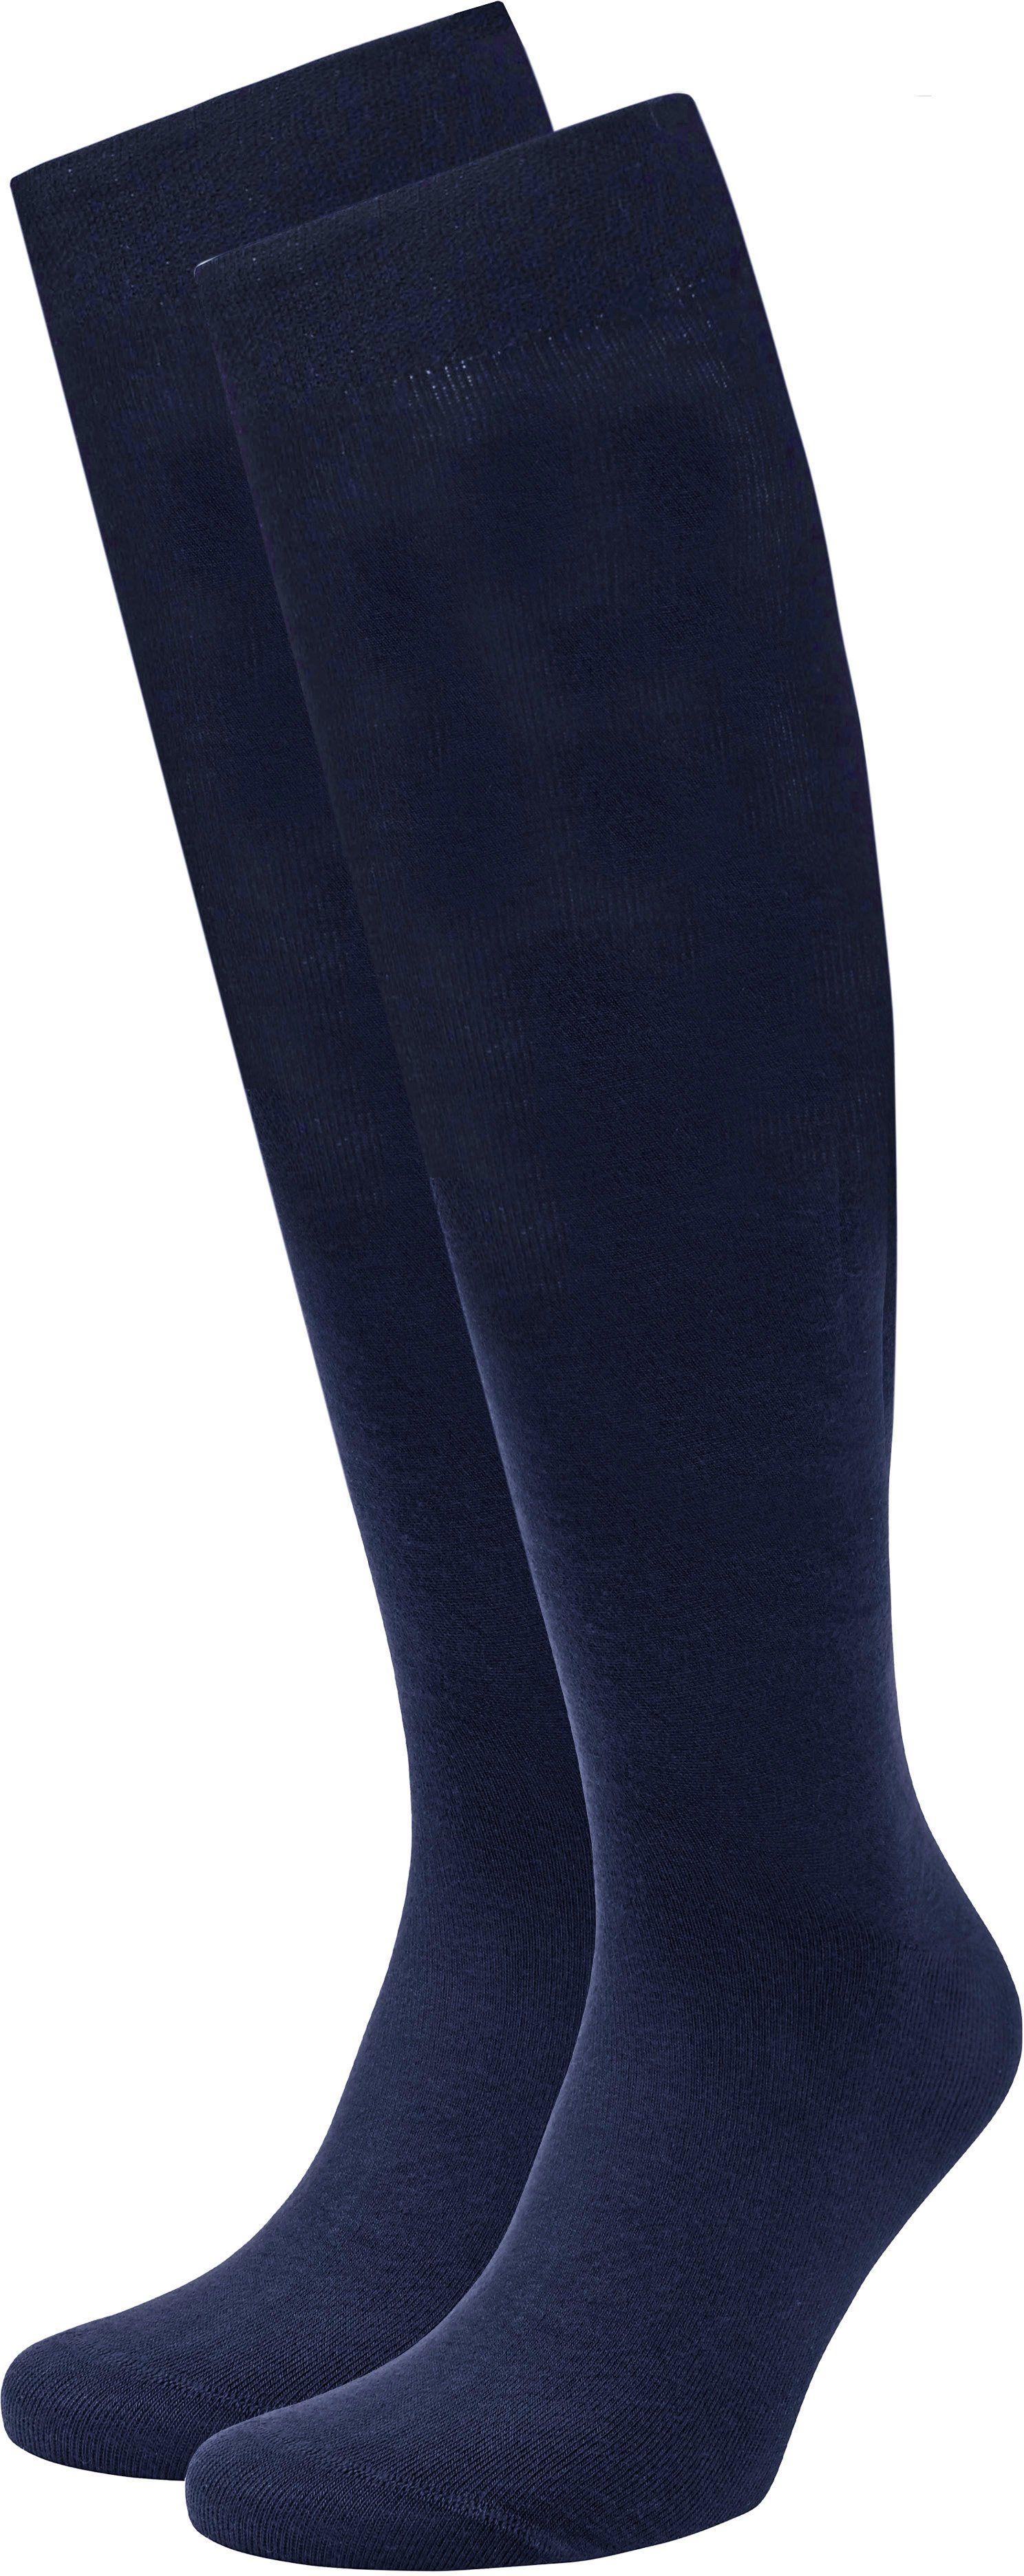 Suitable Knee-High Socks Navy Blue Dark Blue size 43-46